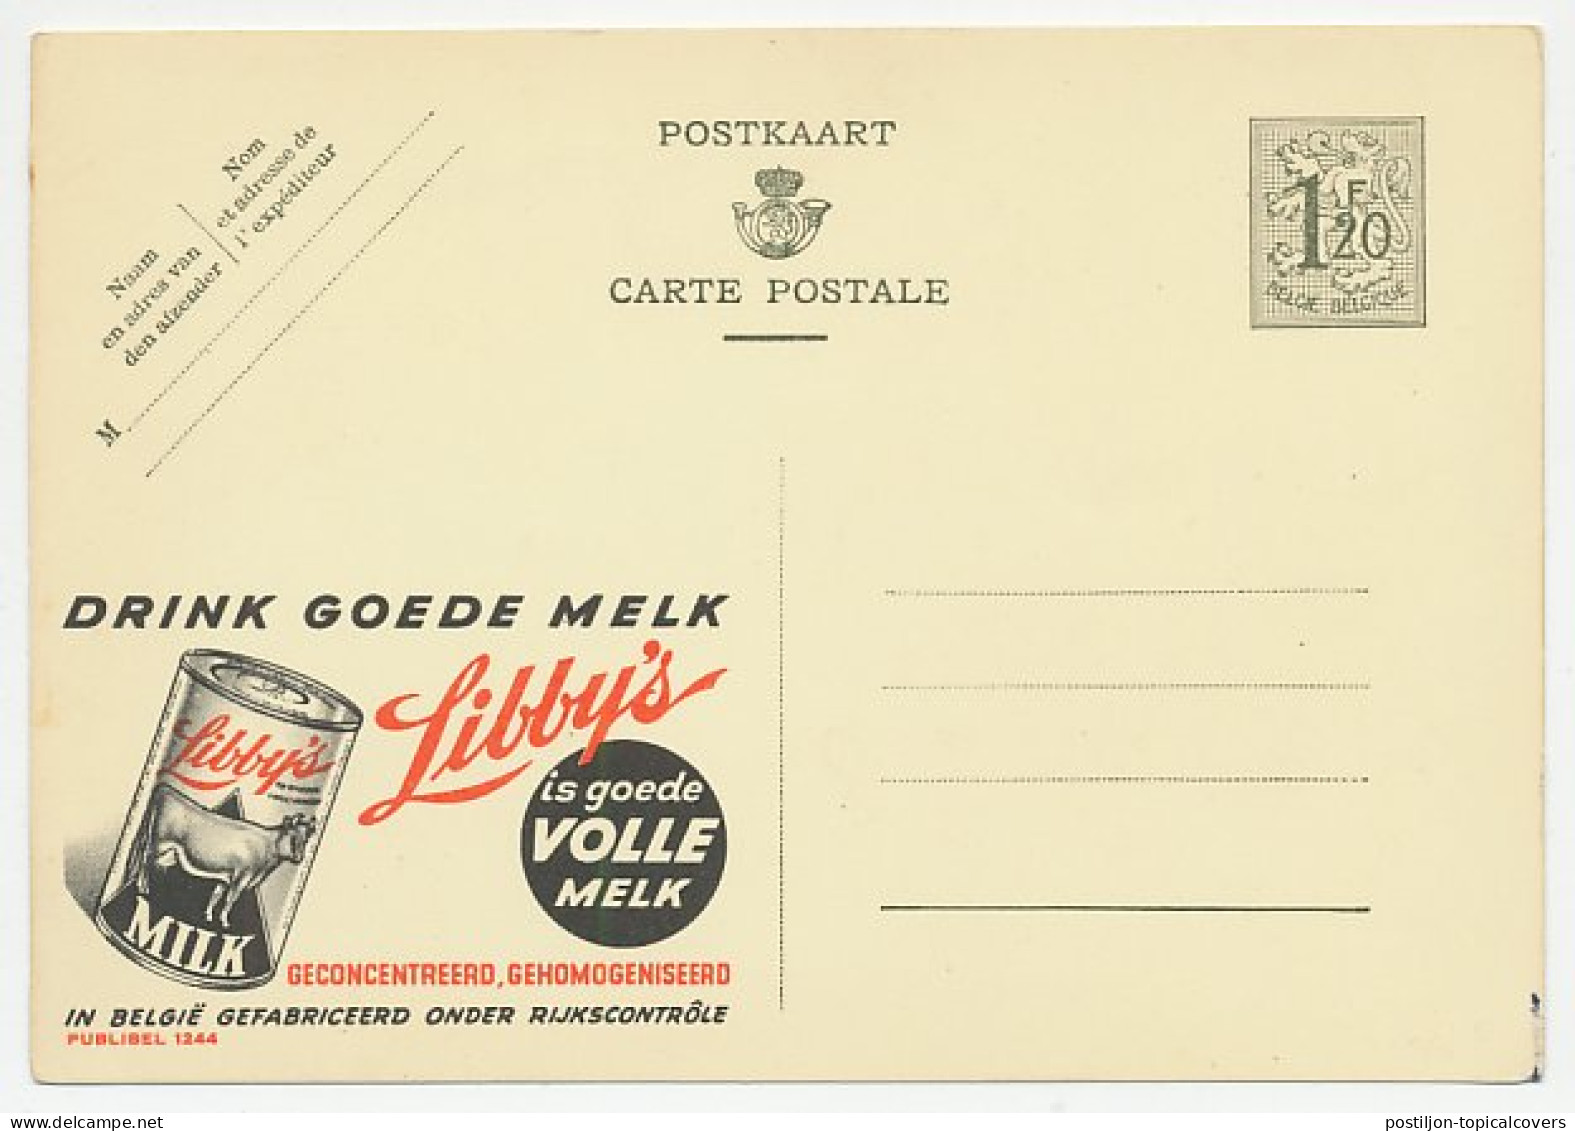 Publibel - Postal Stationery Belgium 1952 Milk - Cow - Alimentation